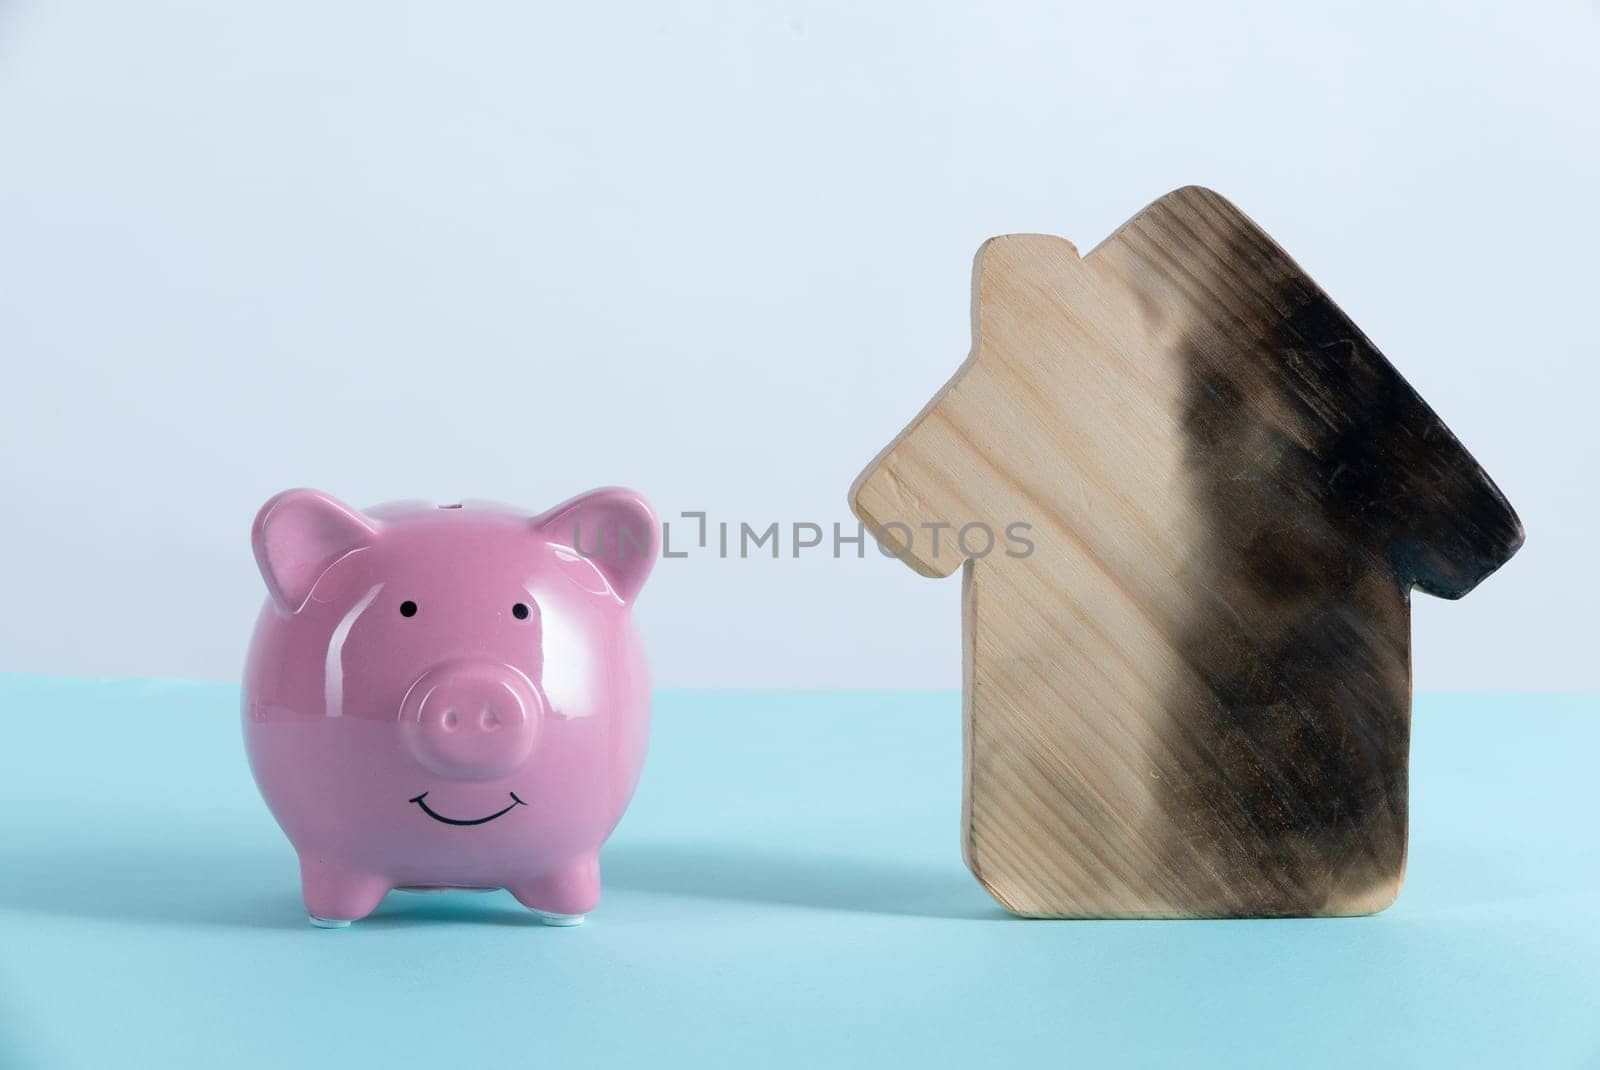 burn house and Piggy bank. Fire insurance concept by zartarn